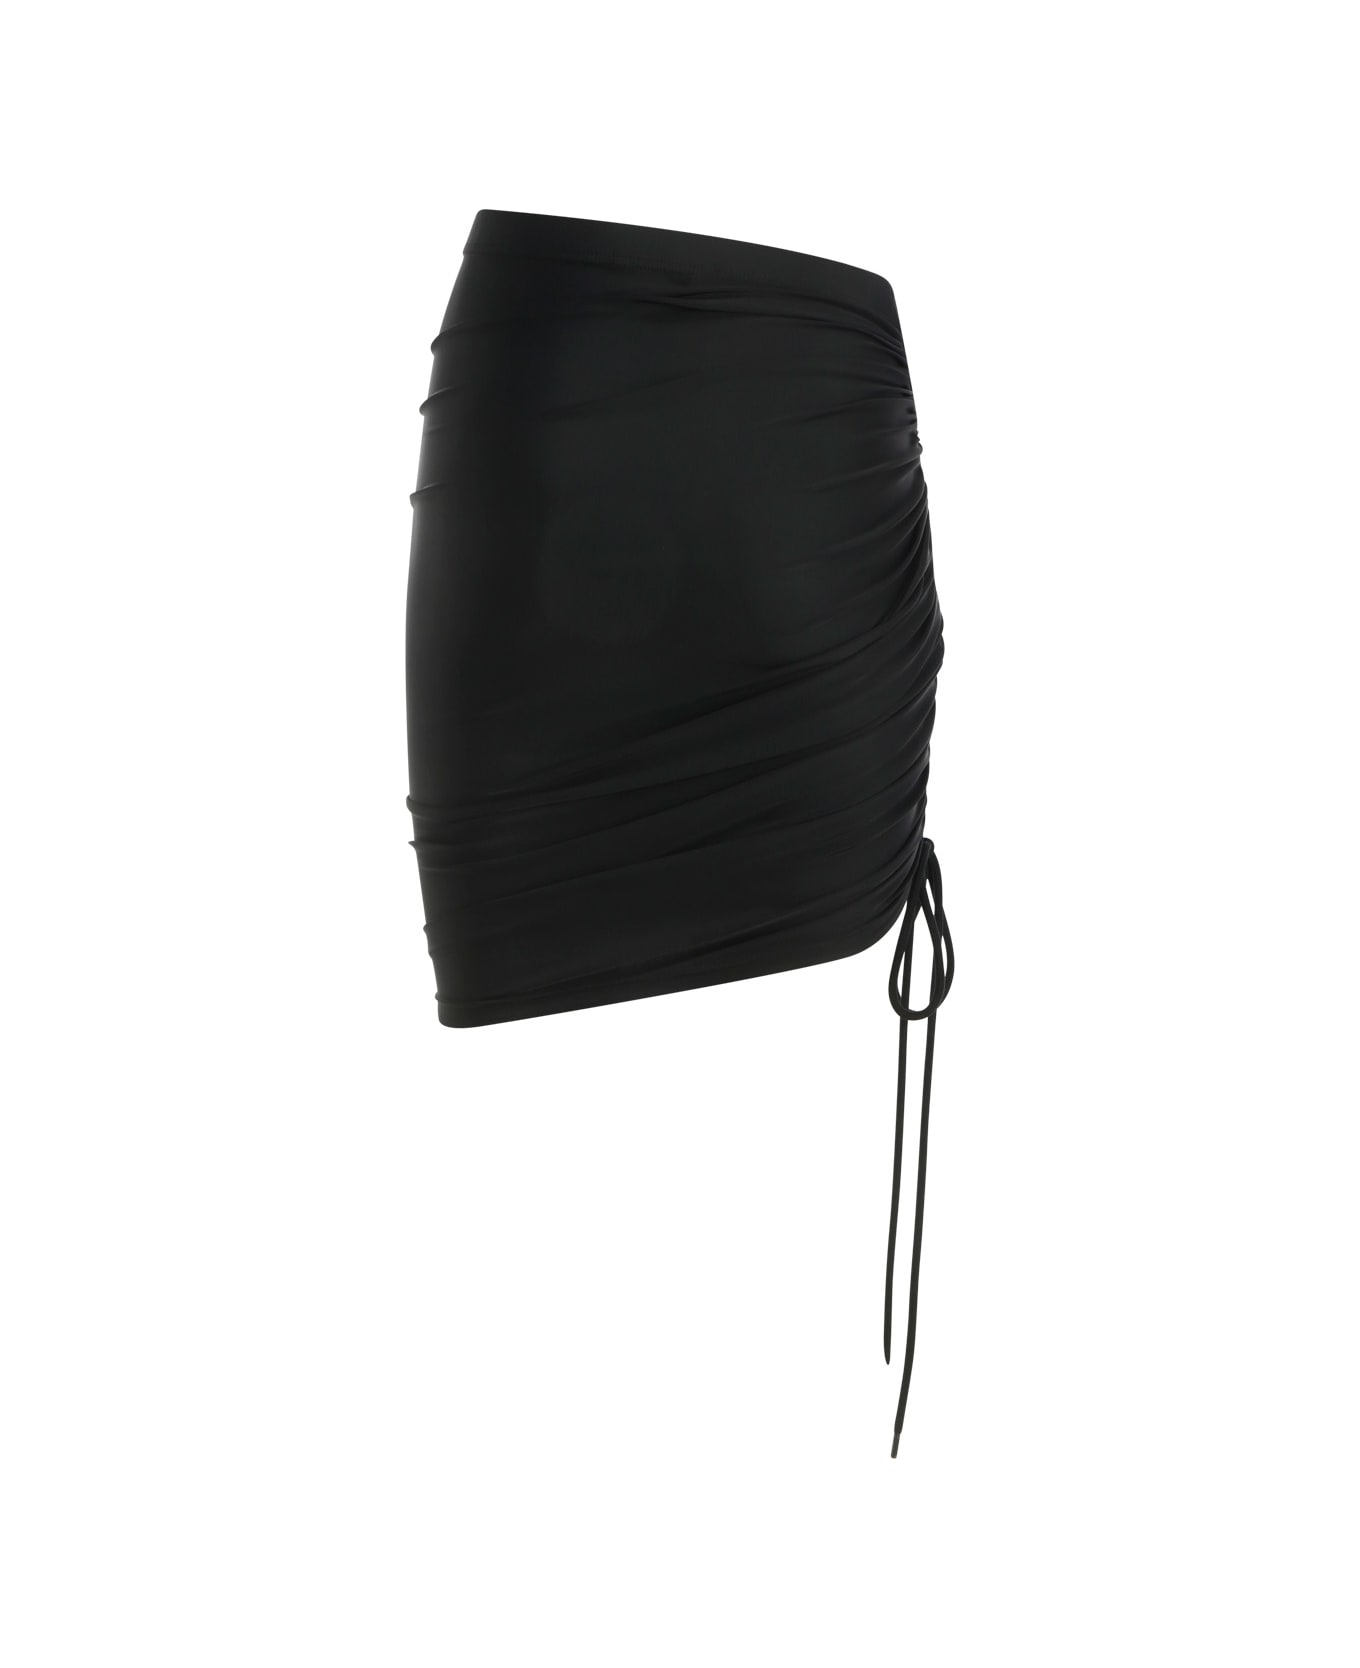 Balenciaga Mini Skirt - Black